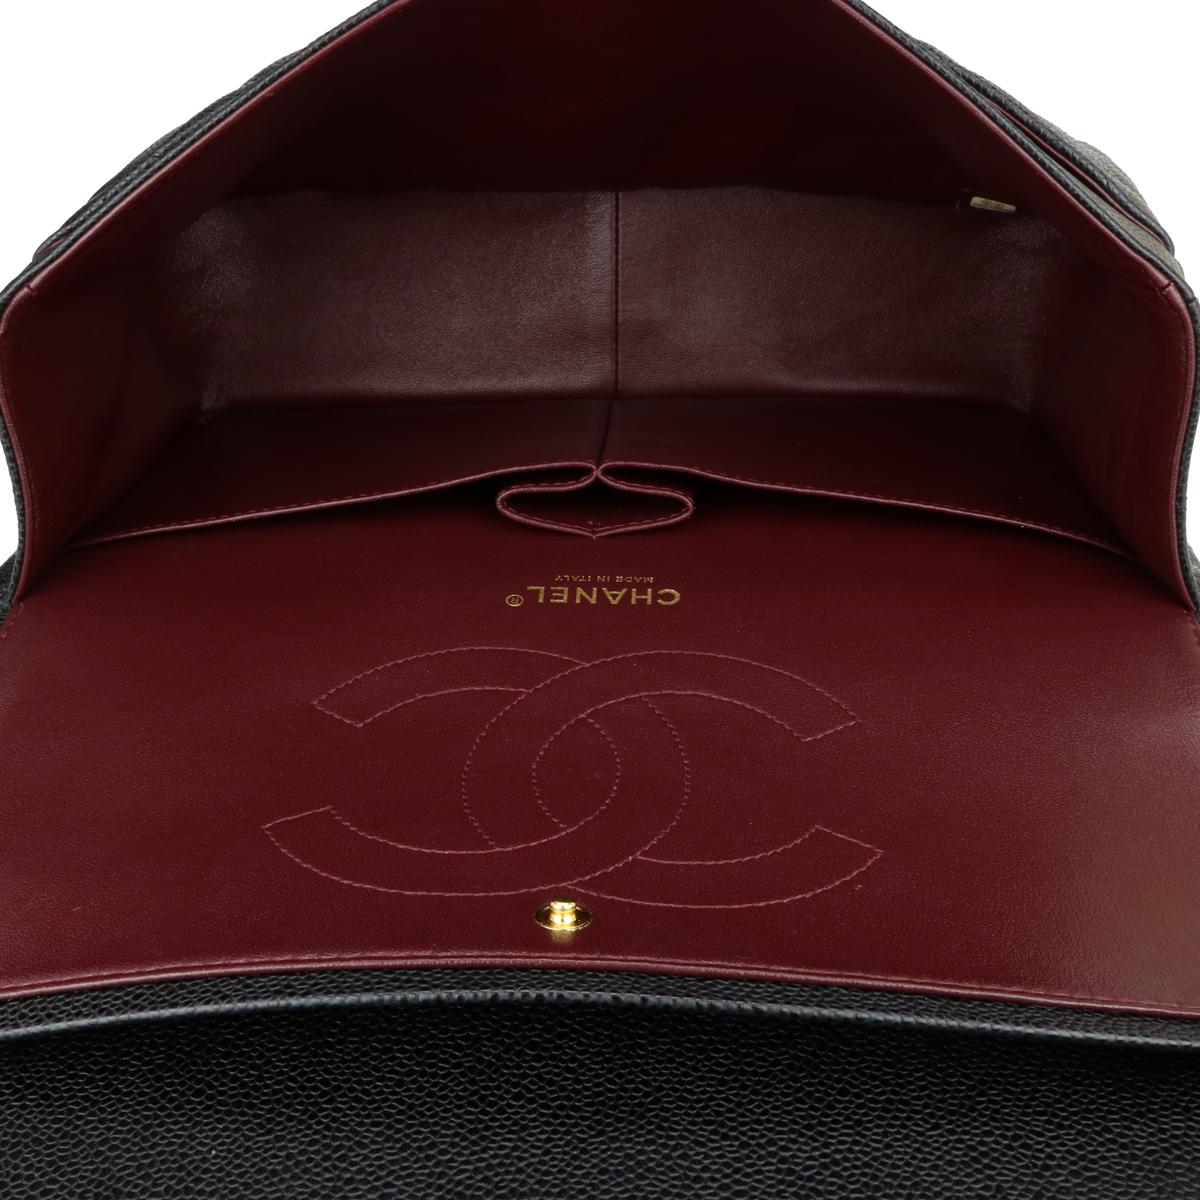 CHANEL Double Flap Jumbo Bag Black Caviar with Gold Hardware 2015 12